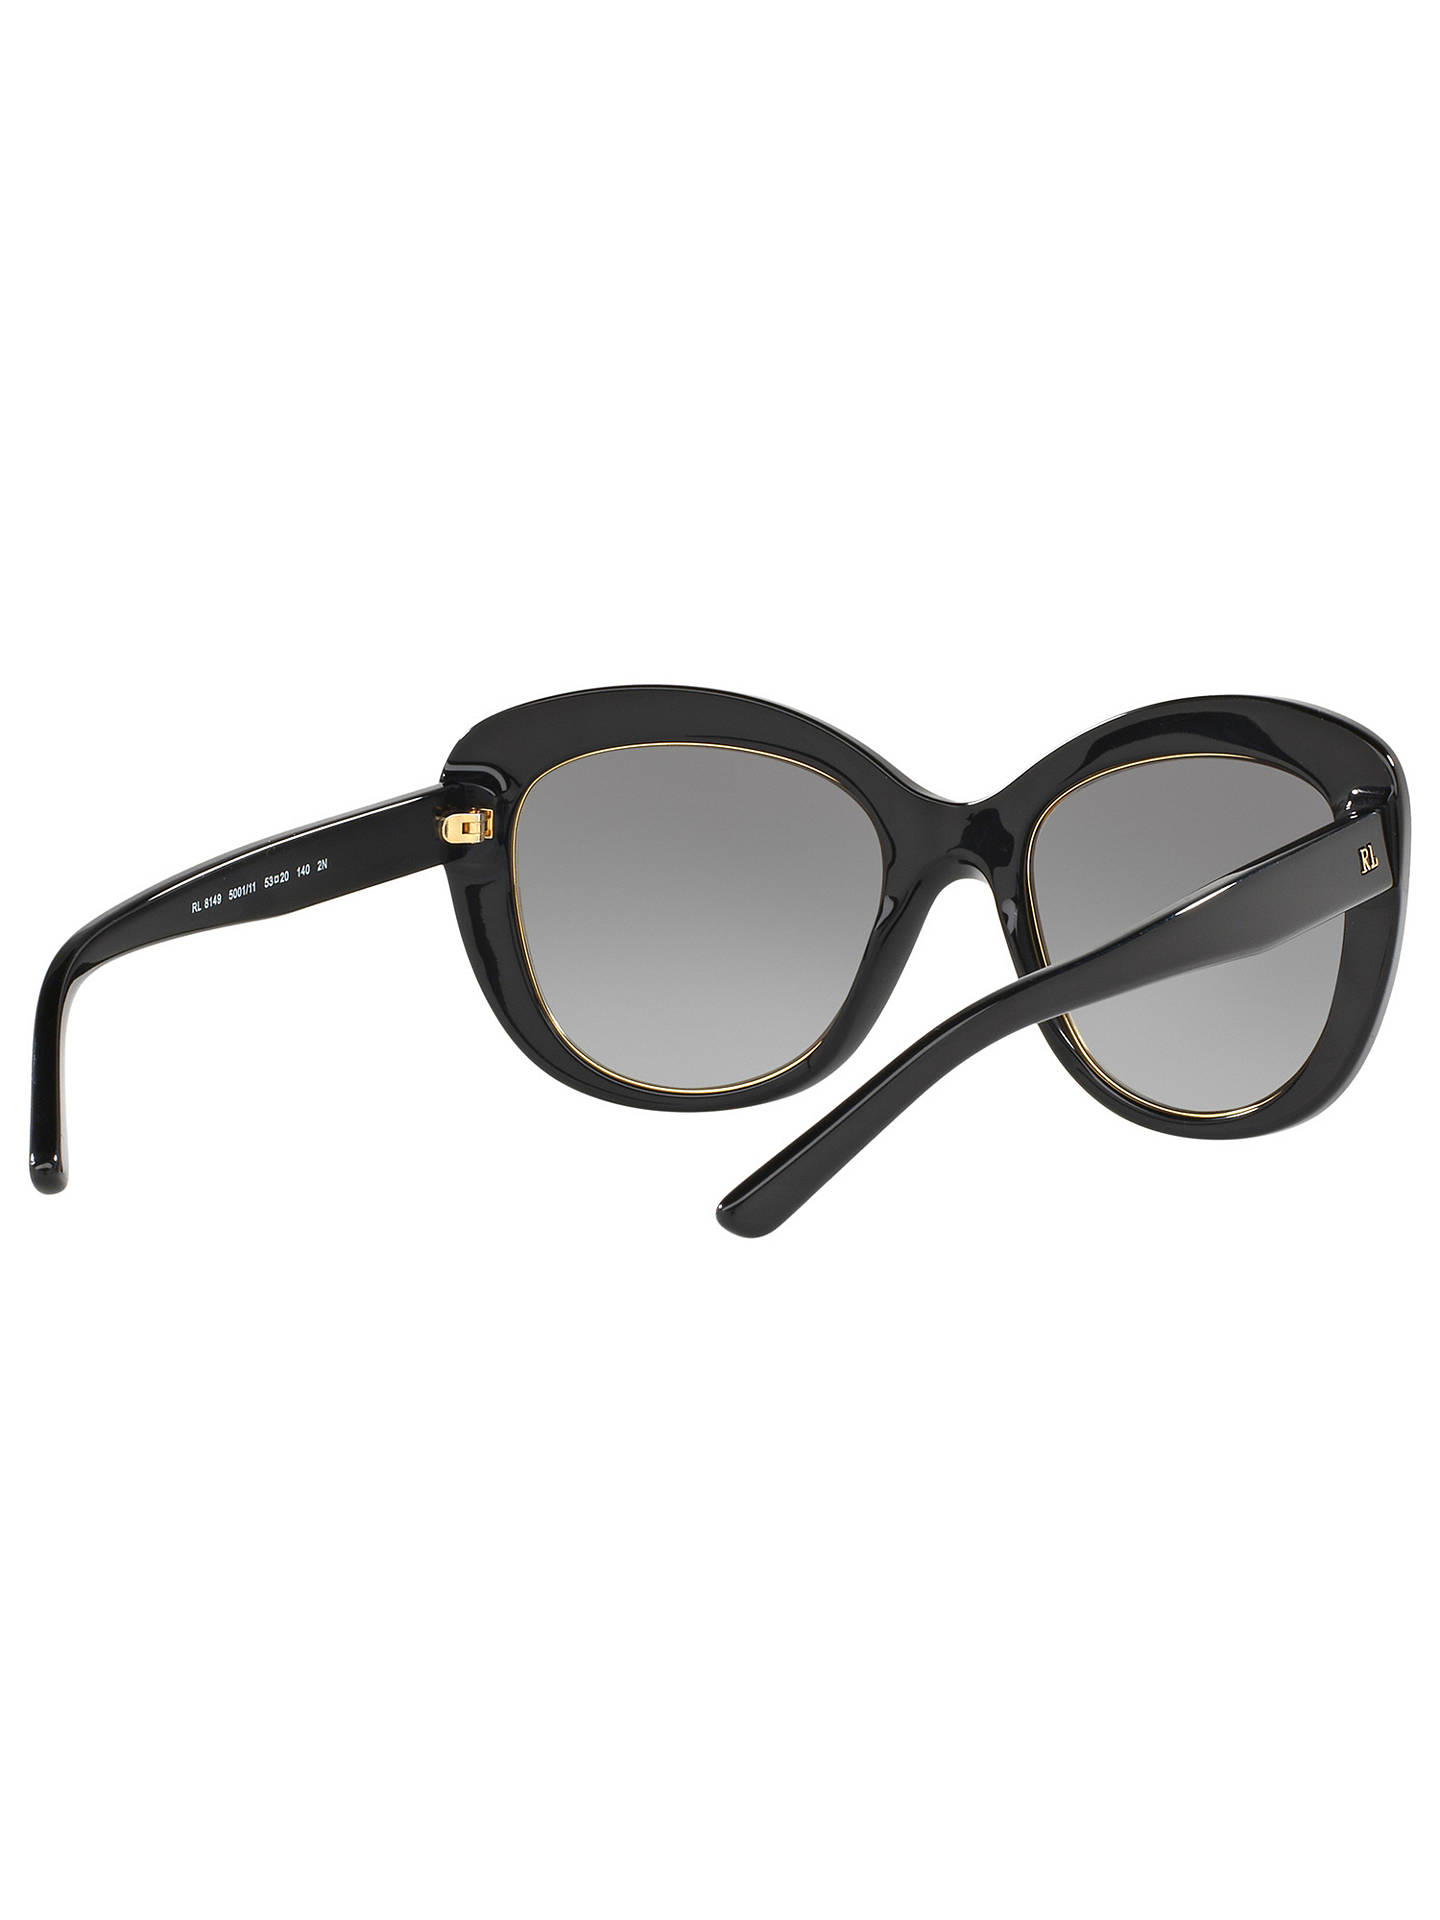 Ralph Lauren RL8149 Cat's Eye Sunglasses, Black at John Lewis & Partners